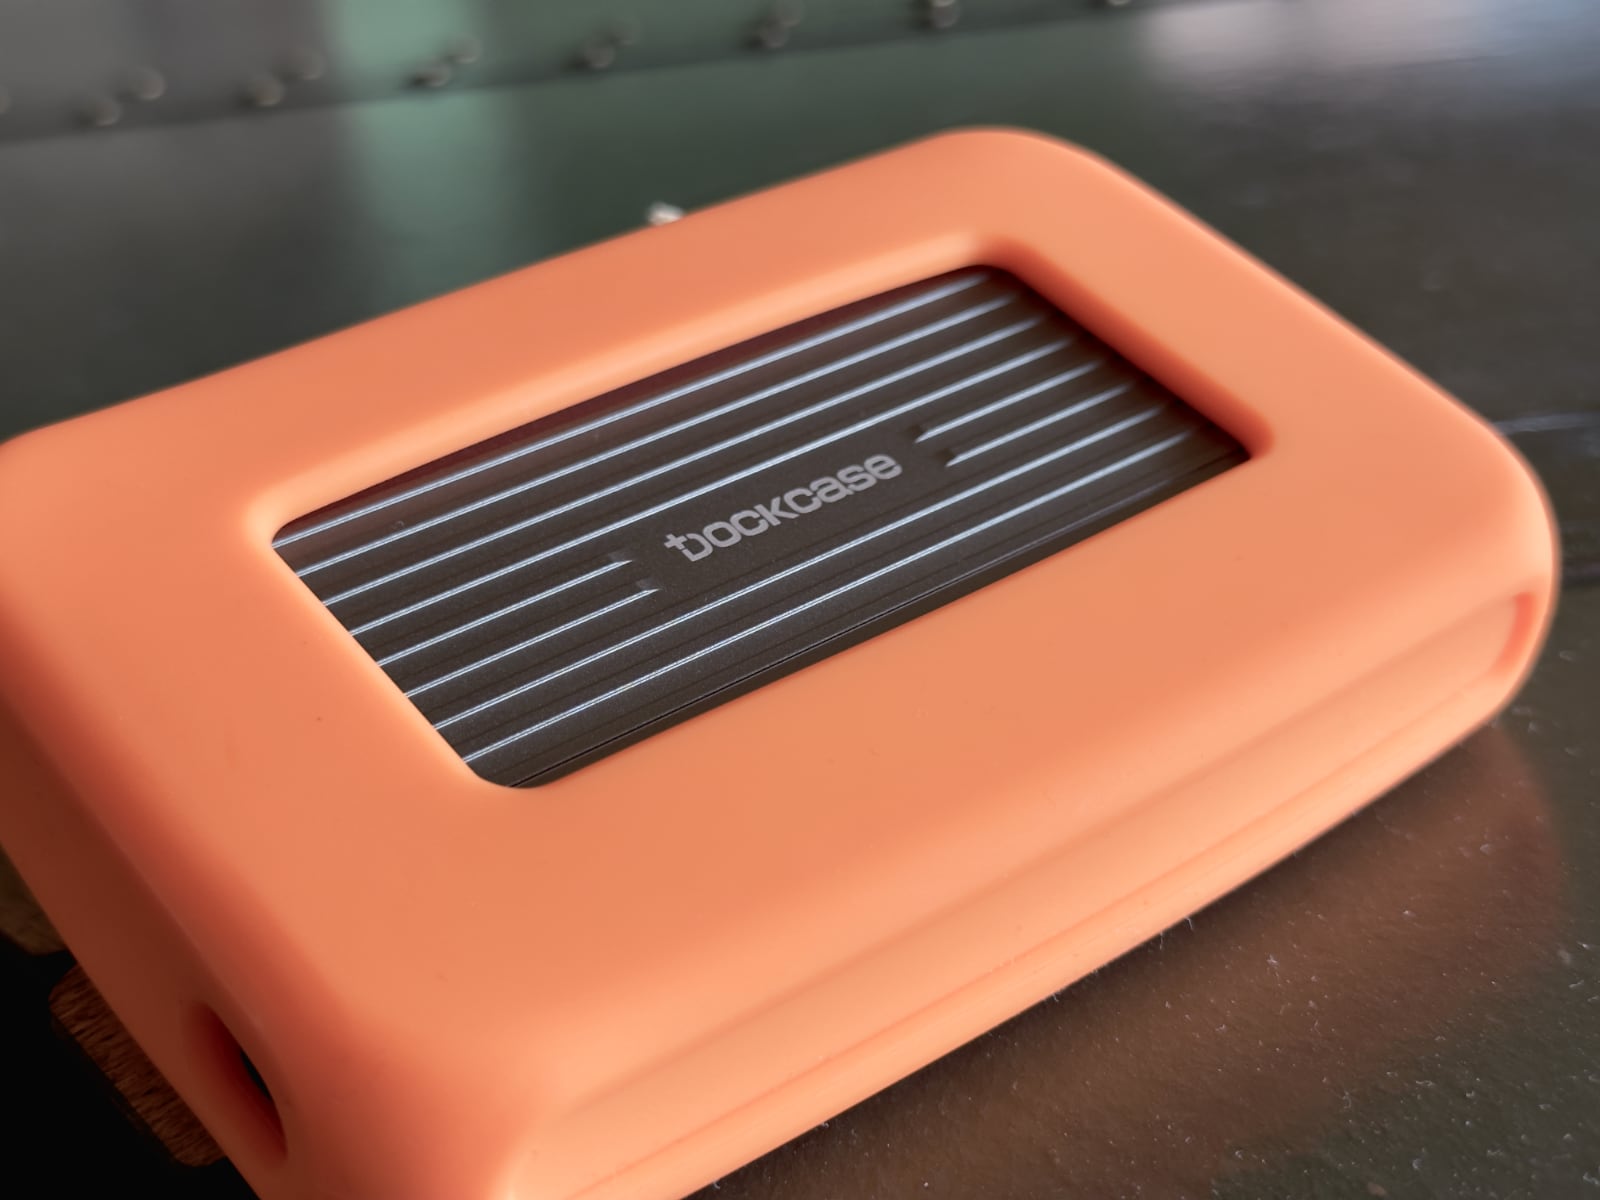 DockCase external storage enclosure in an orange protective case, sitting on a desk